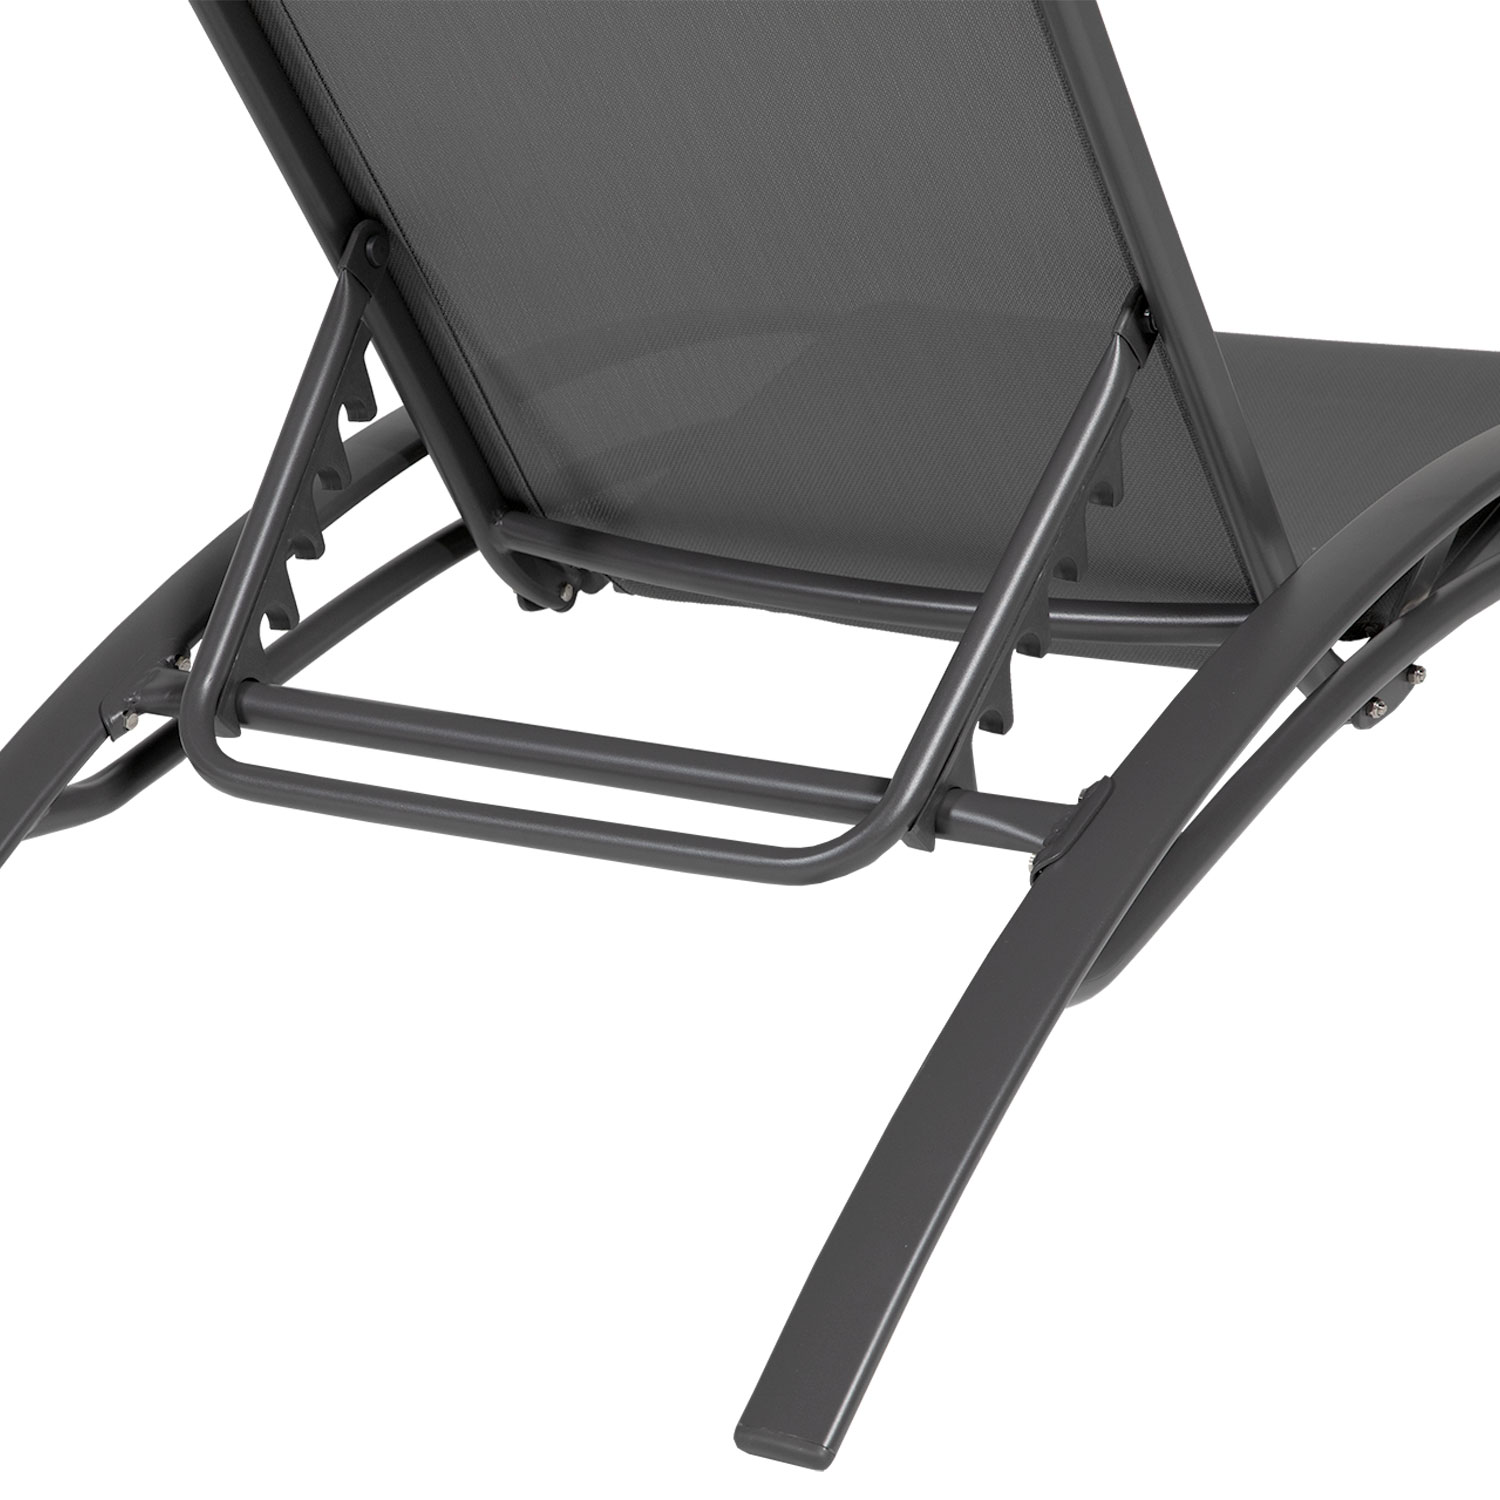 Conjunto de 2 cadeiras de convés GALAPAGOS em textileno cinzento - antracite cinzento alumínio